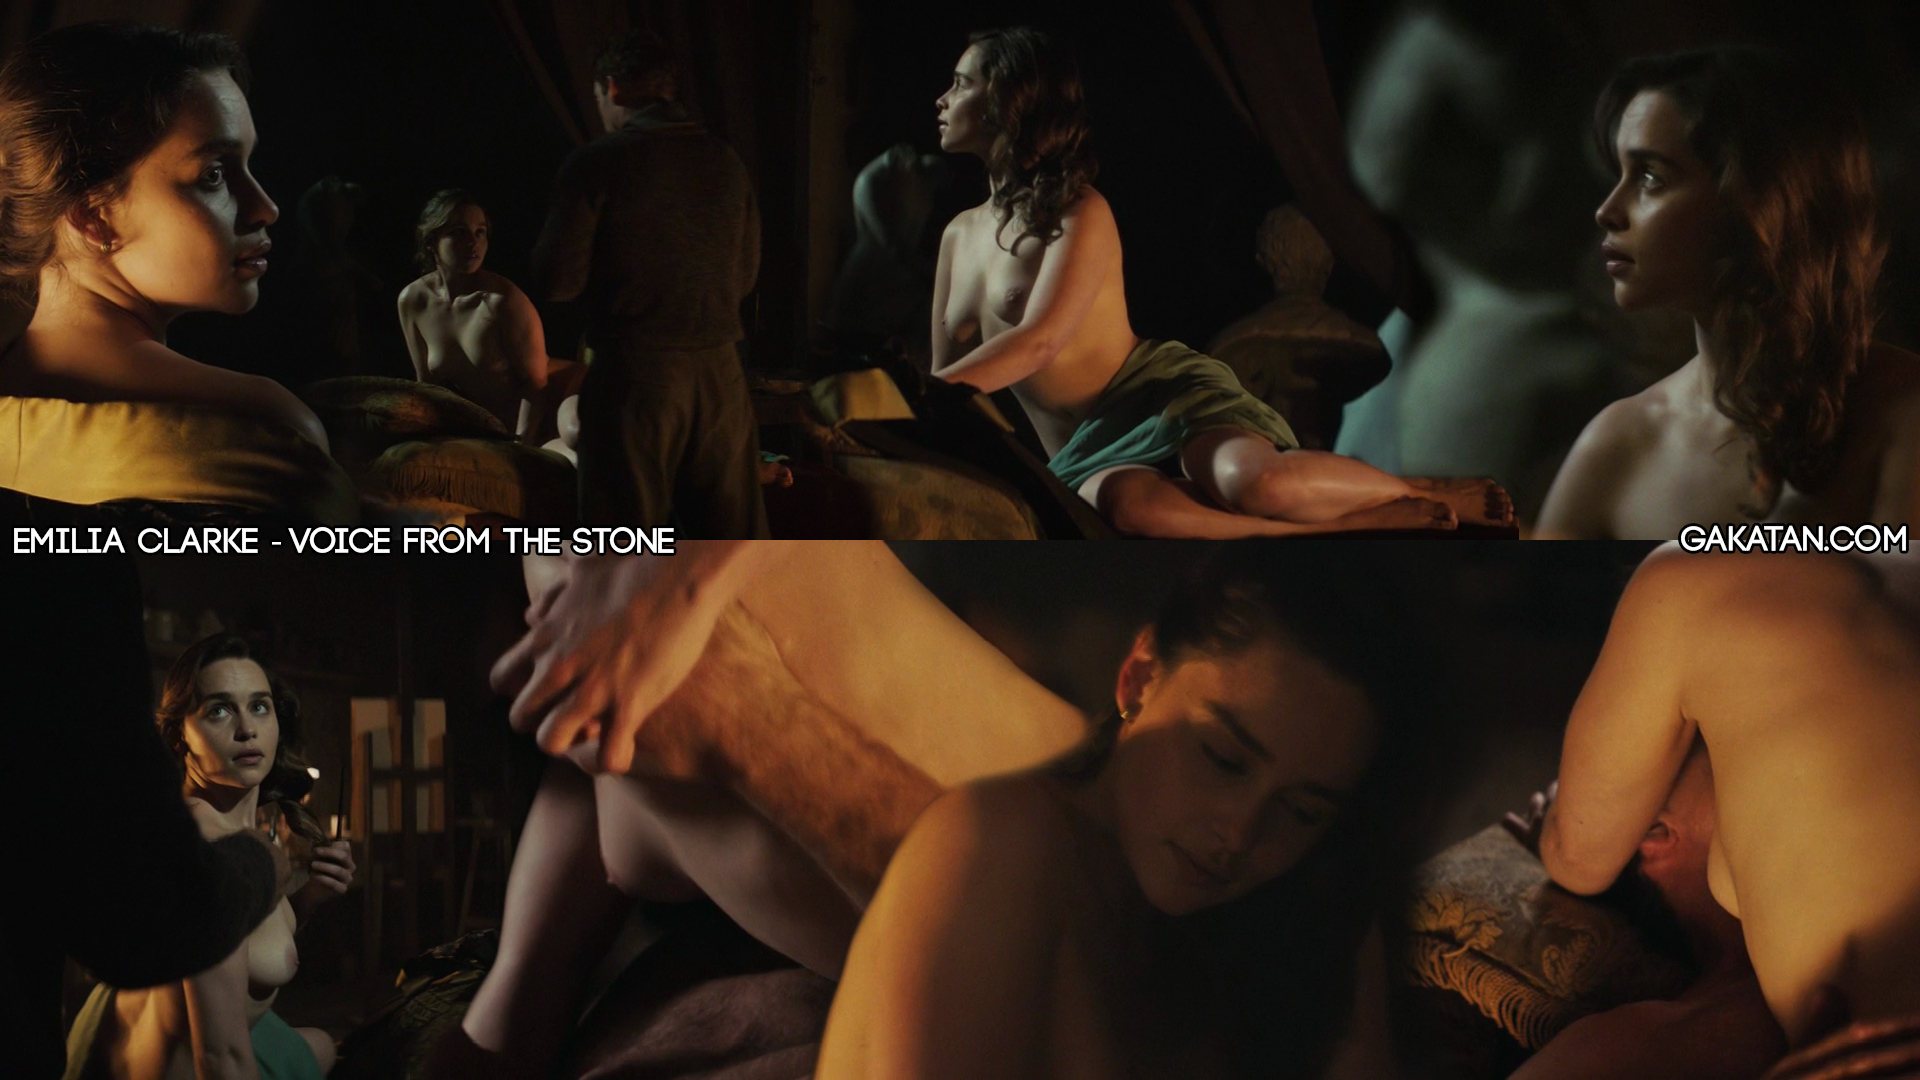 Emilia clarke voice from the stone nude scene